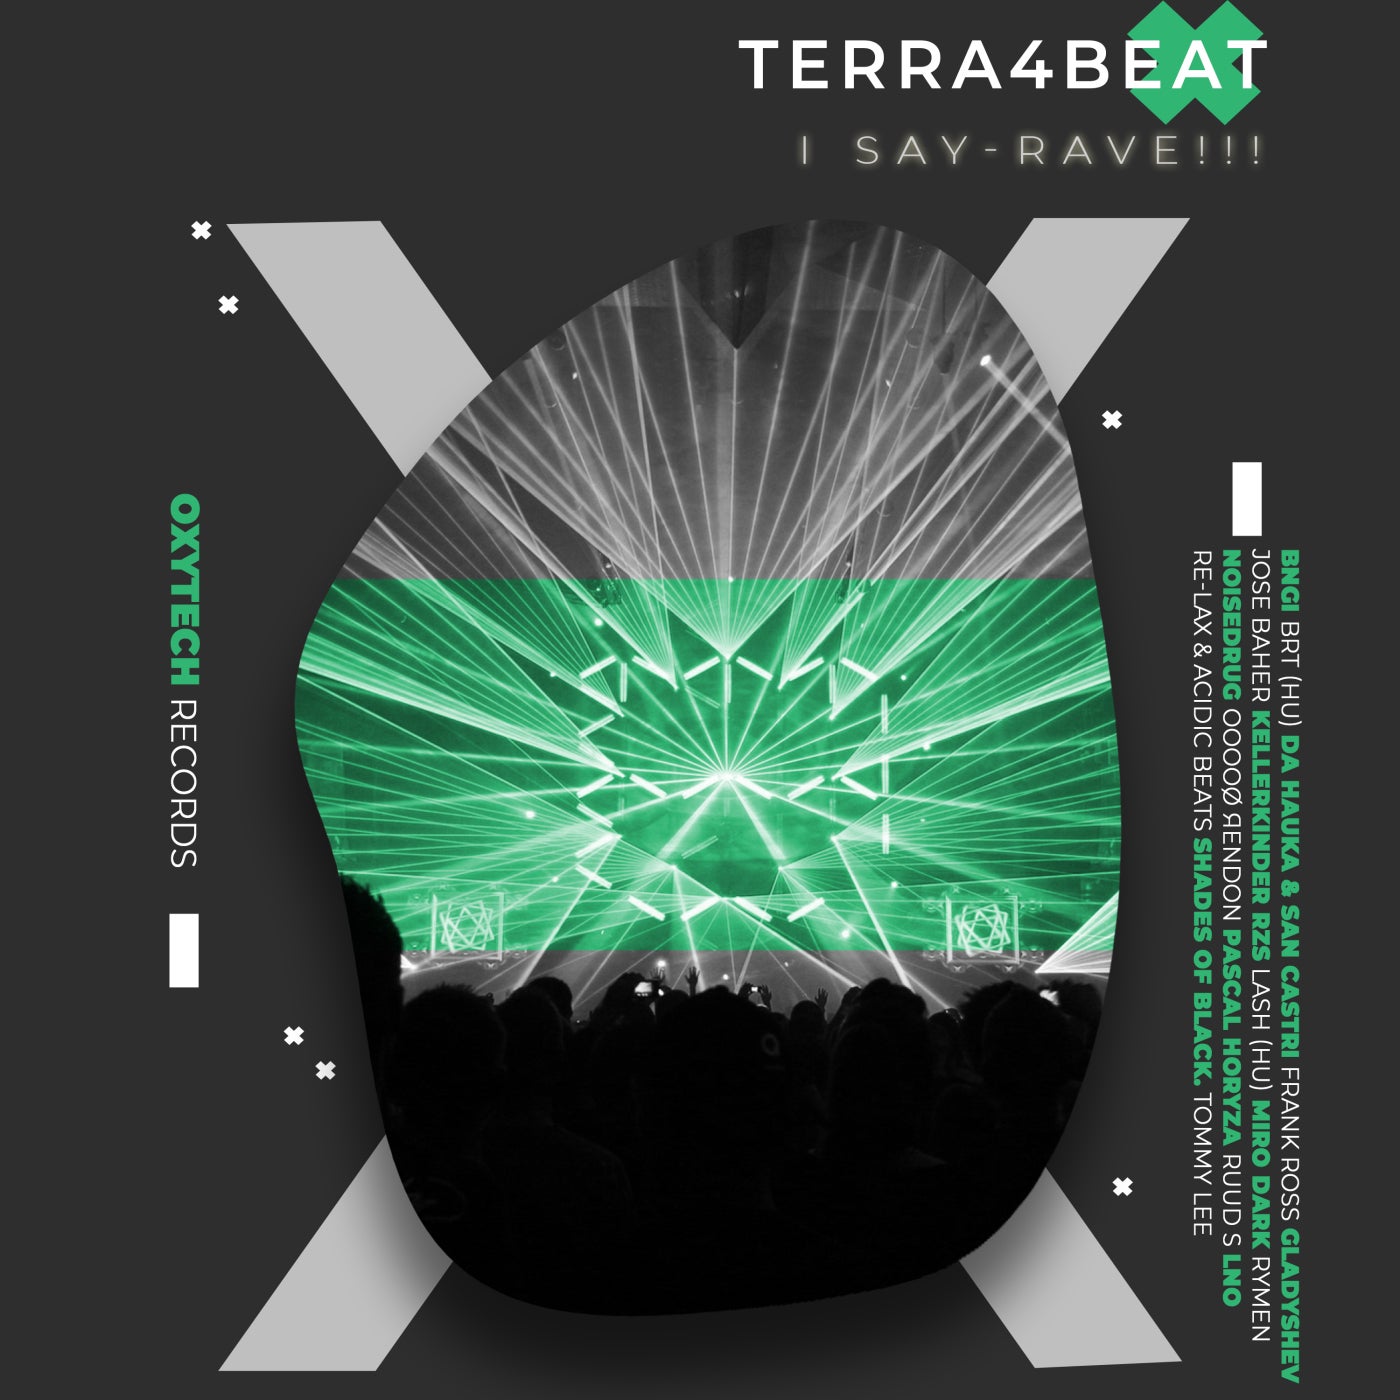 Terra4beat – I Say-Rave!!! [OTR1136]